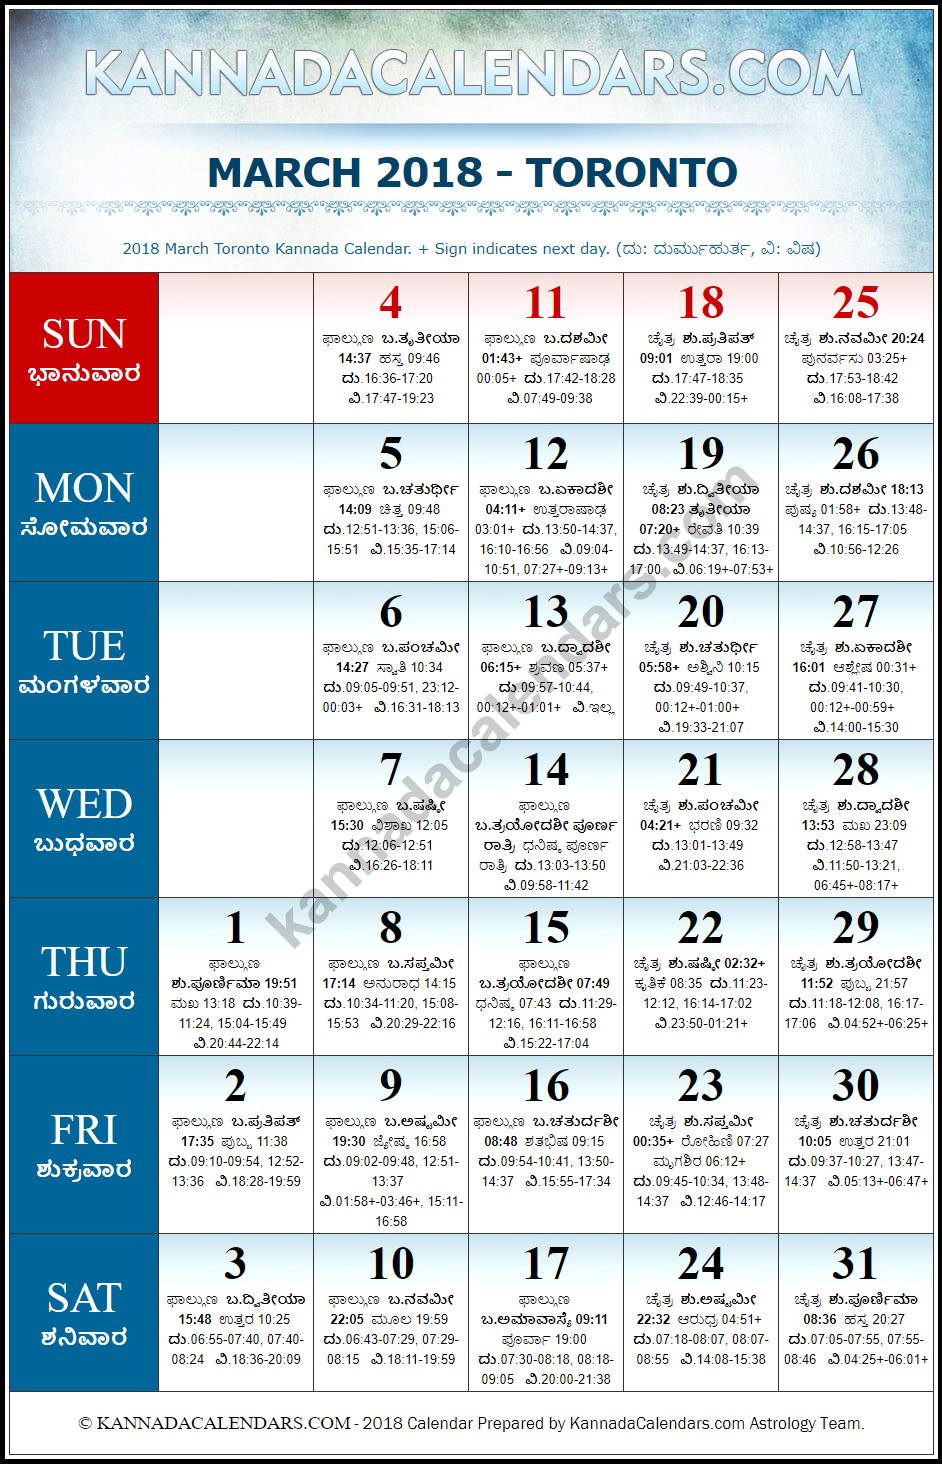 March 2018 Kannada Calendar for Toronto, Canada